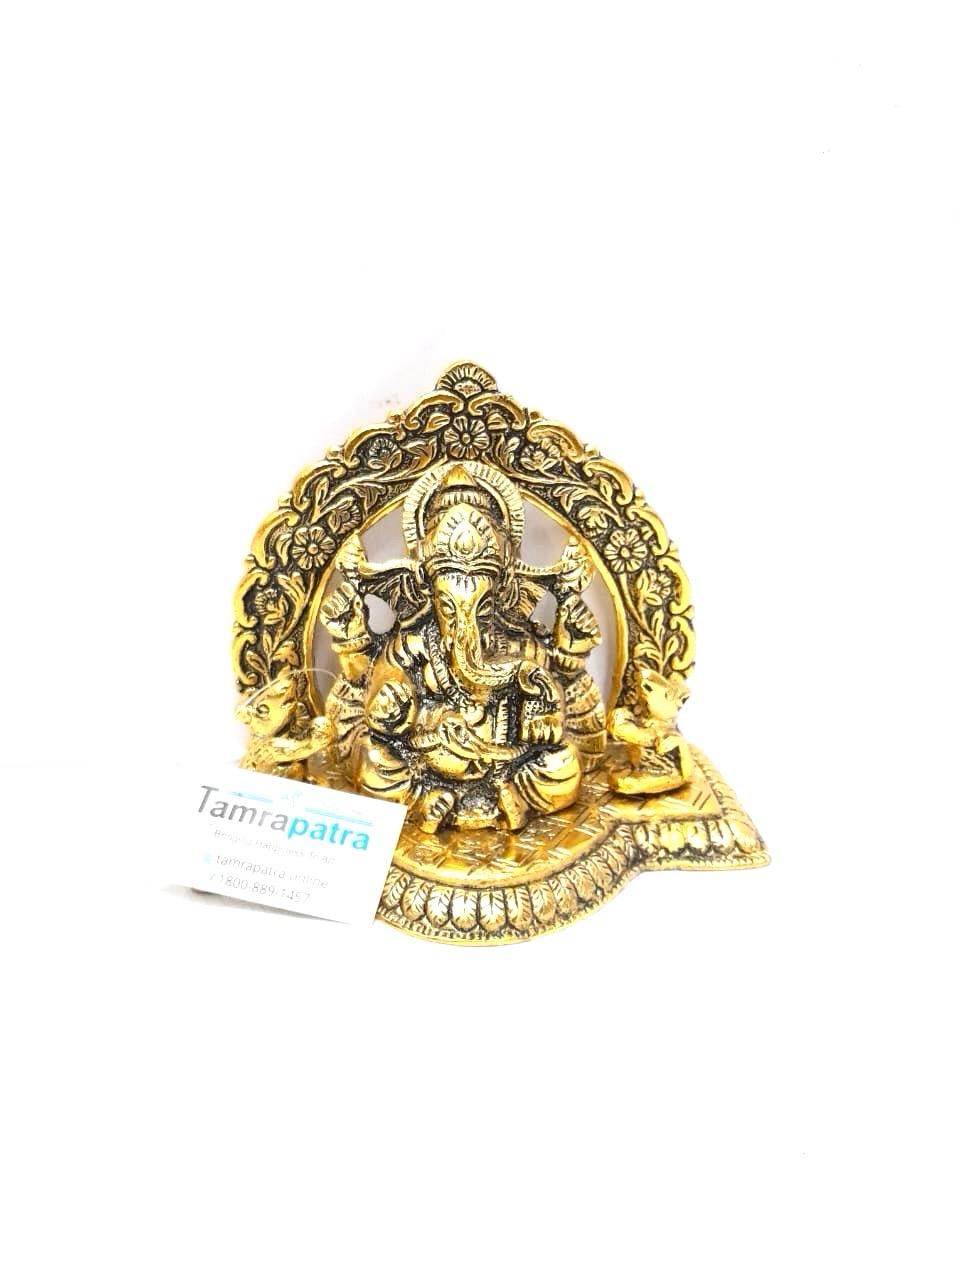 Metal Religious Idol Ganesh spiritual Collection In Various Designs From Tamrpaatra